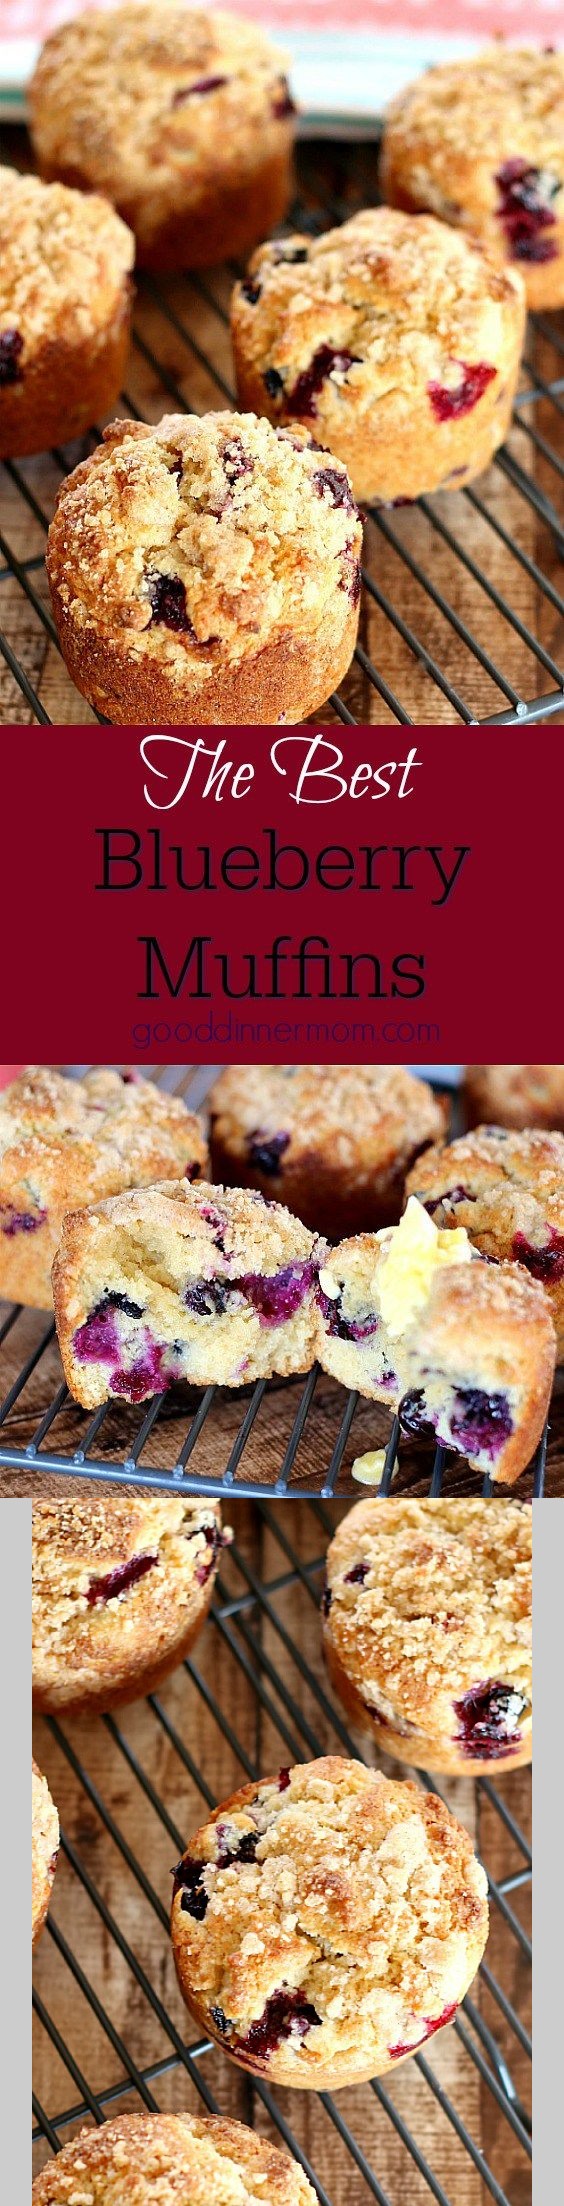 Gourmet Bakery Blueberry Muffins